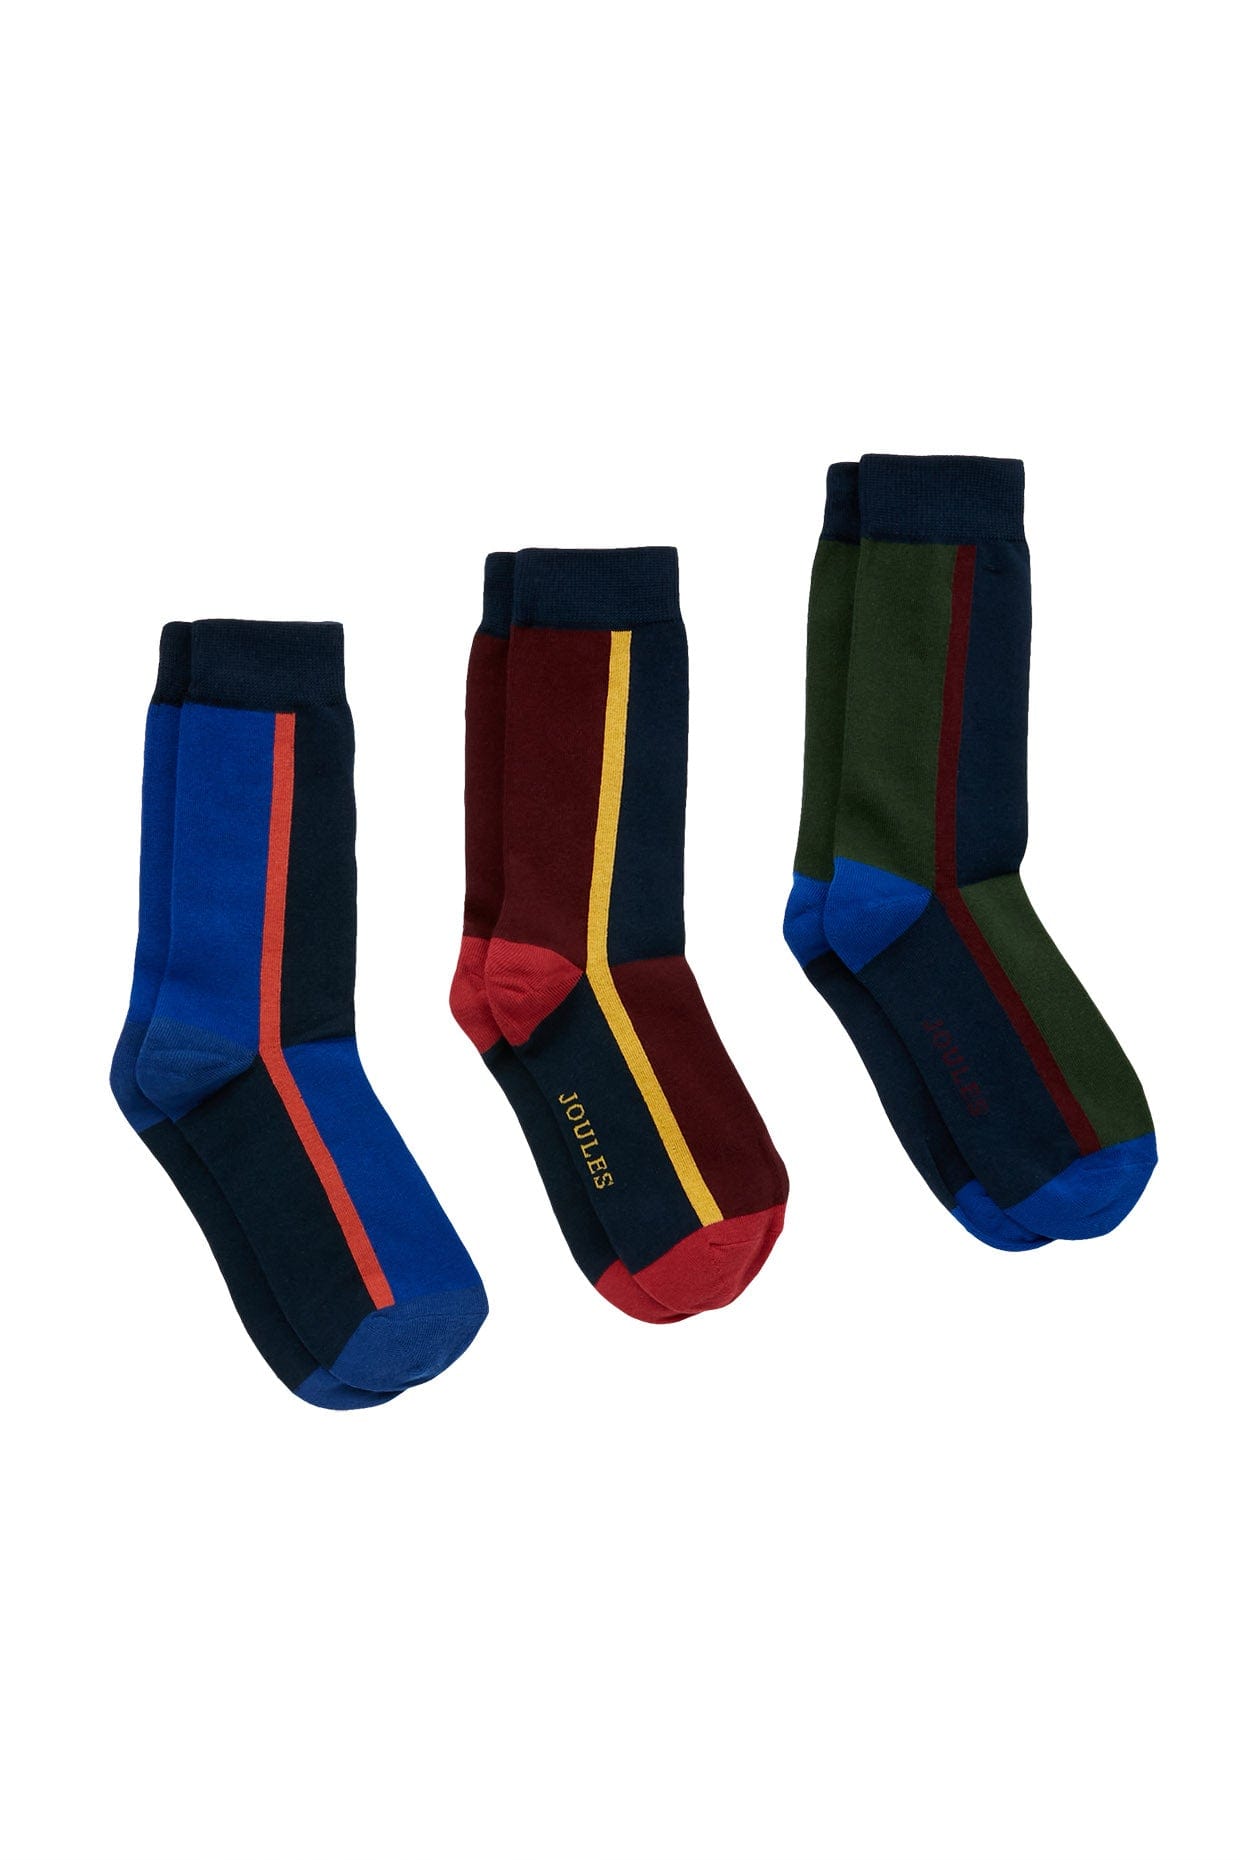 Joules Striking 3 Pack Cotton Socks - Navy Colour Block 217743_NVYCOLBLK_7-12